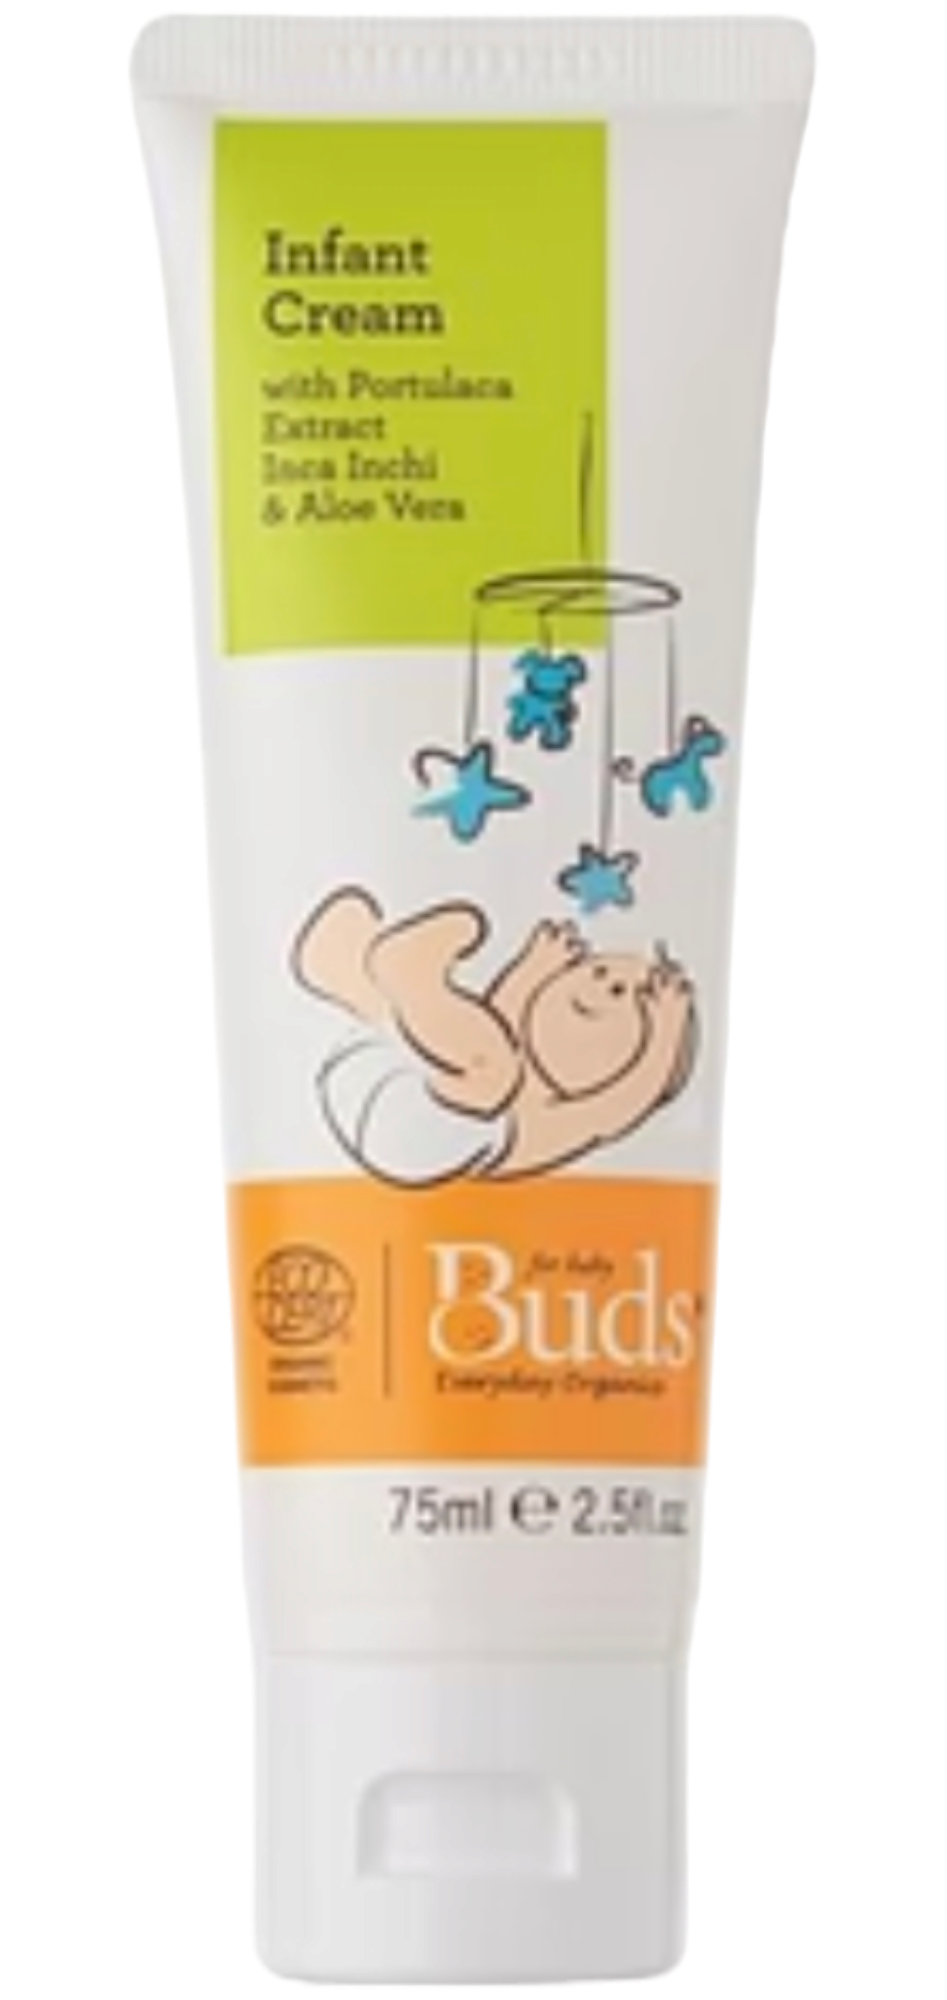 Buds Infant Cream 75ml